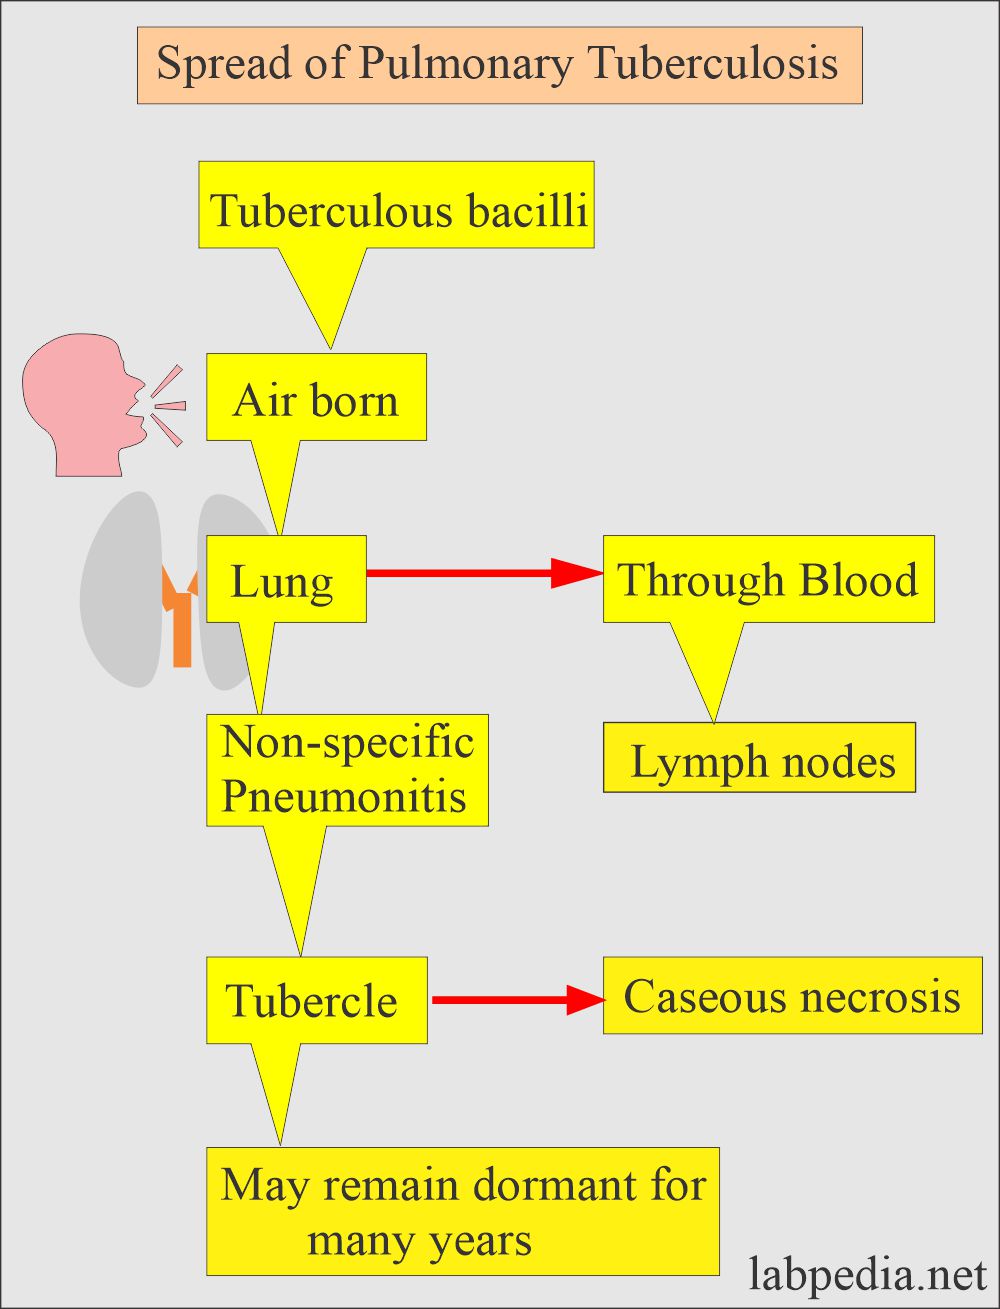 Spread of pulmonary tuberculosis